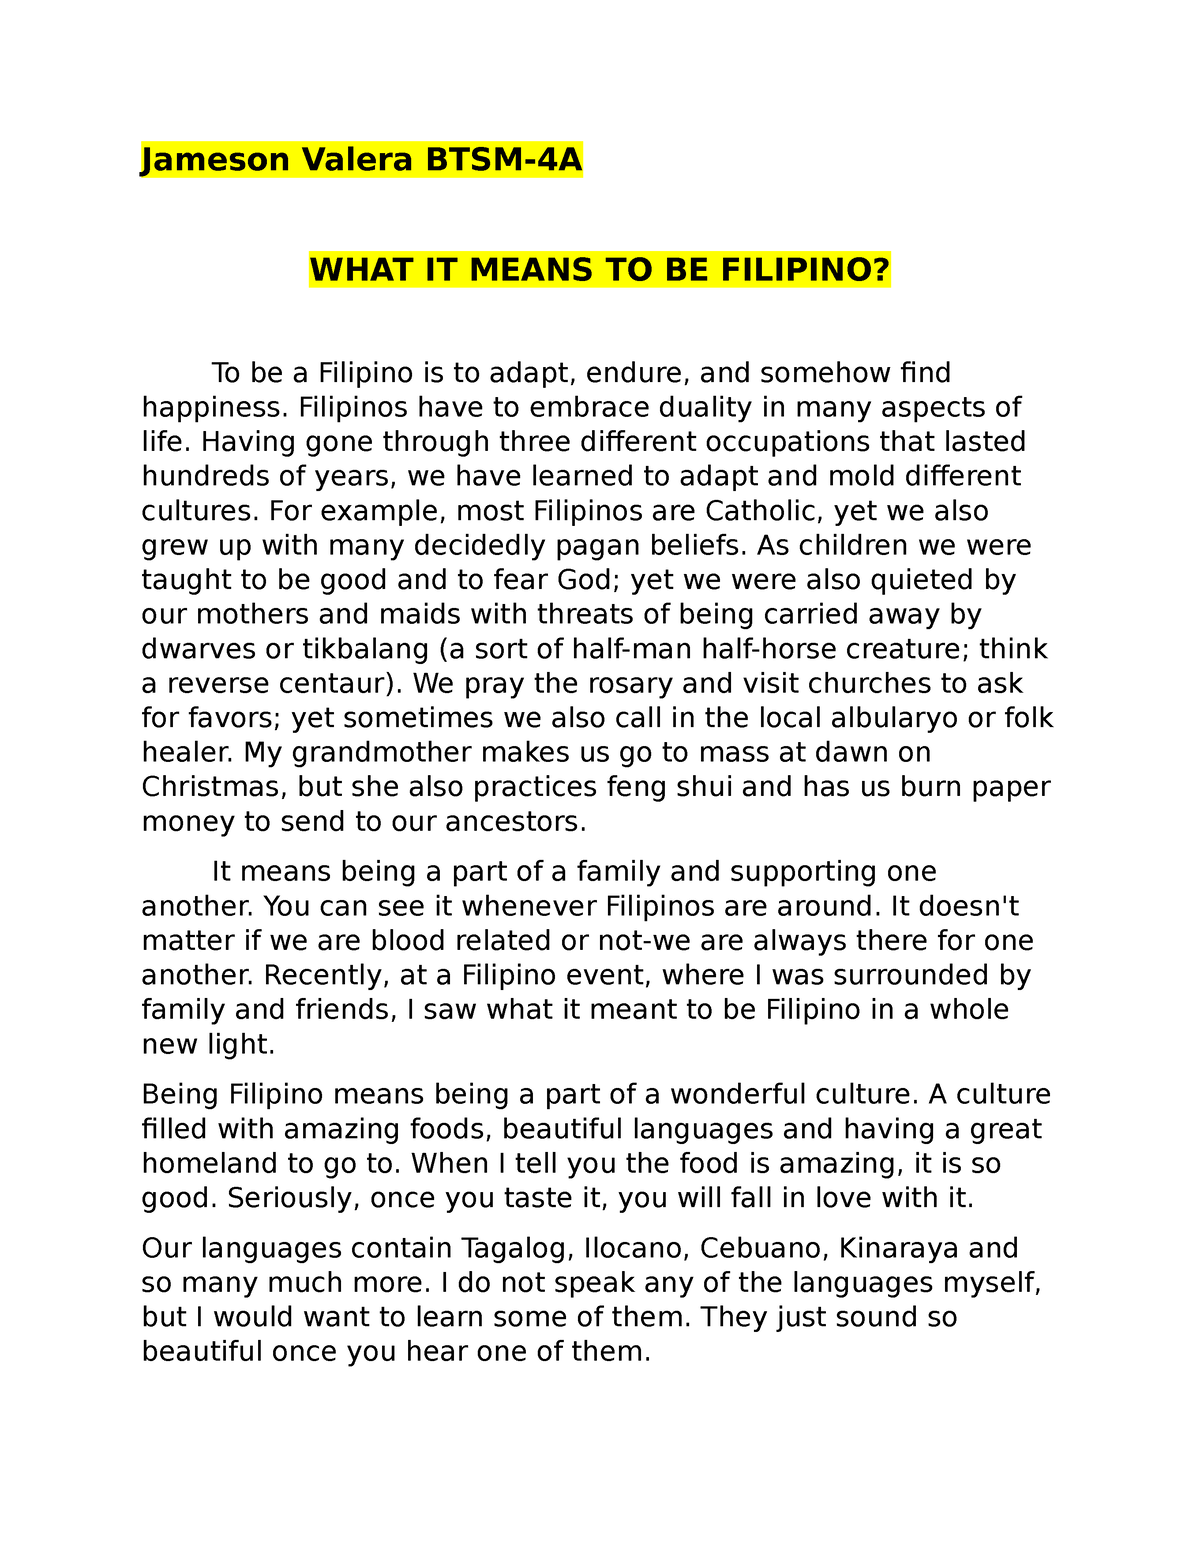 photo essay example filipino for students